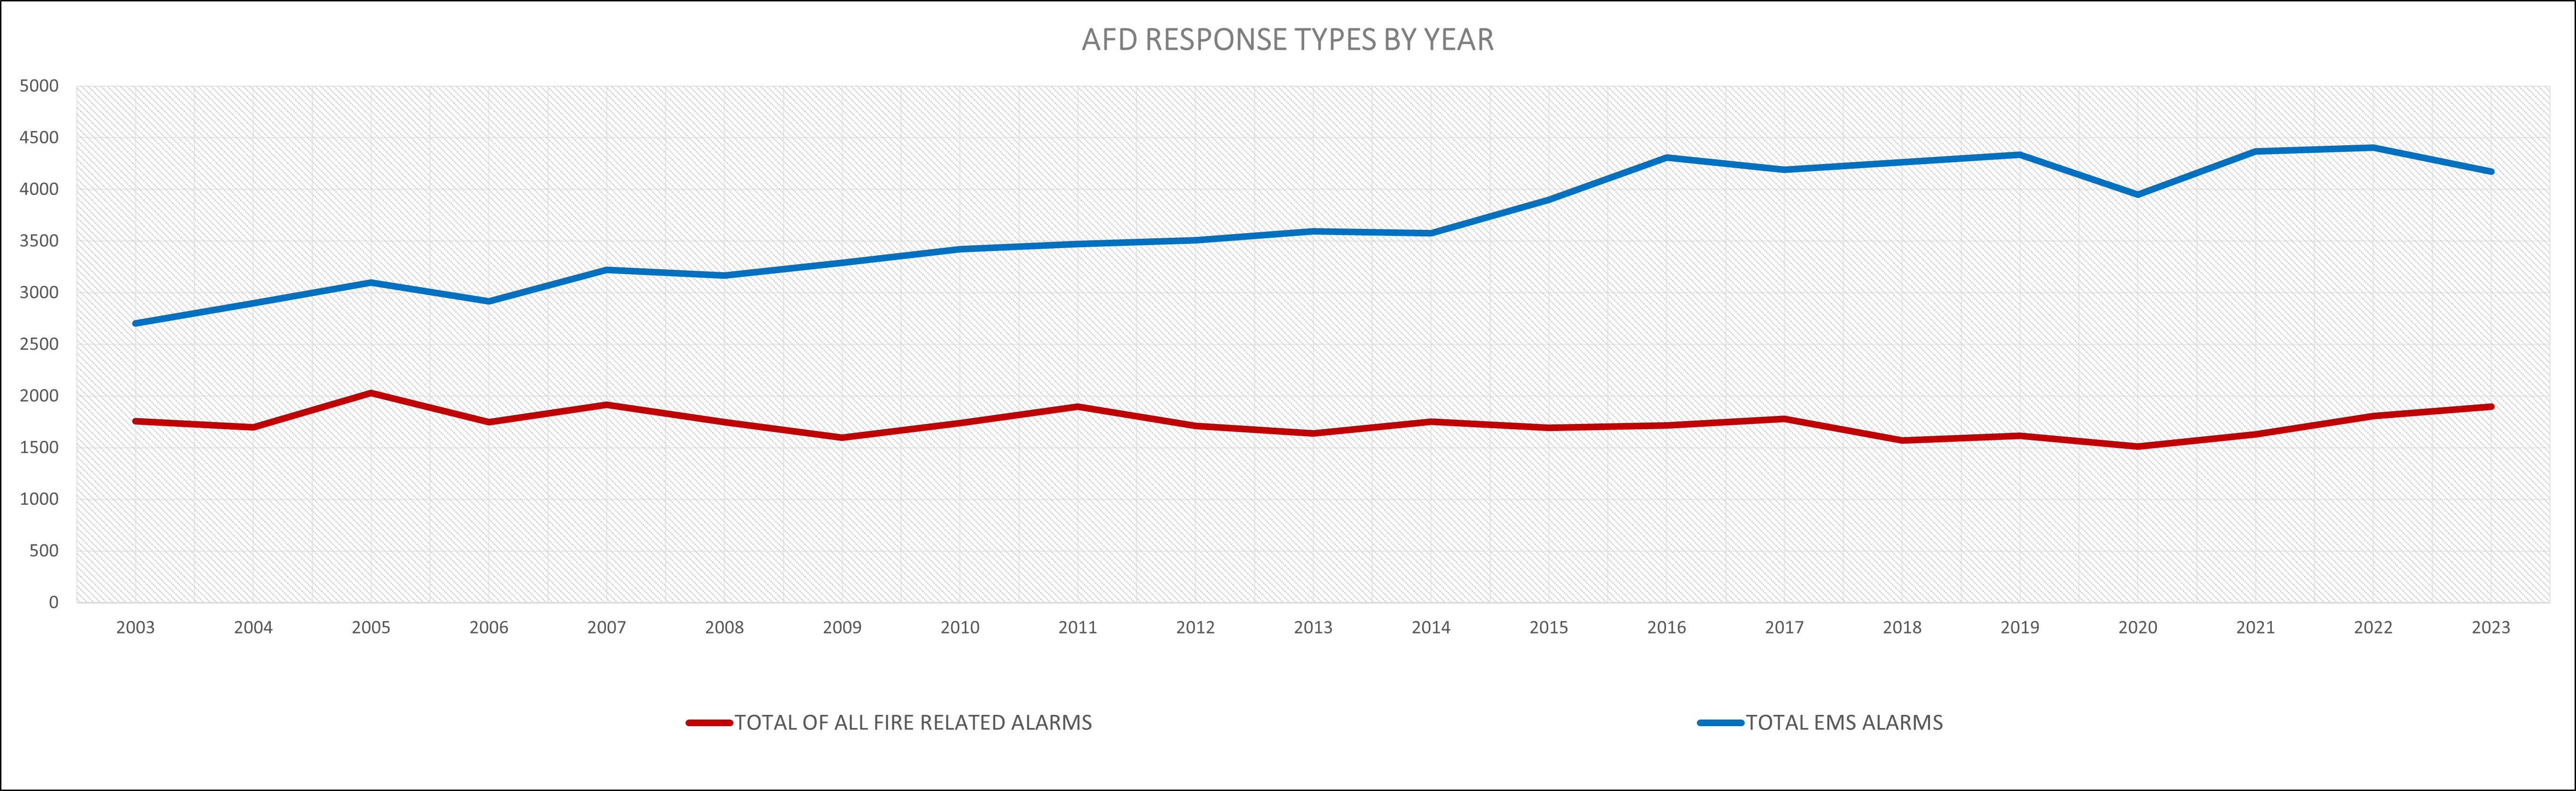 AFD Annual Alarm Breakdown